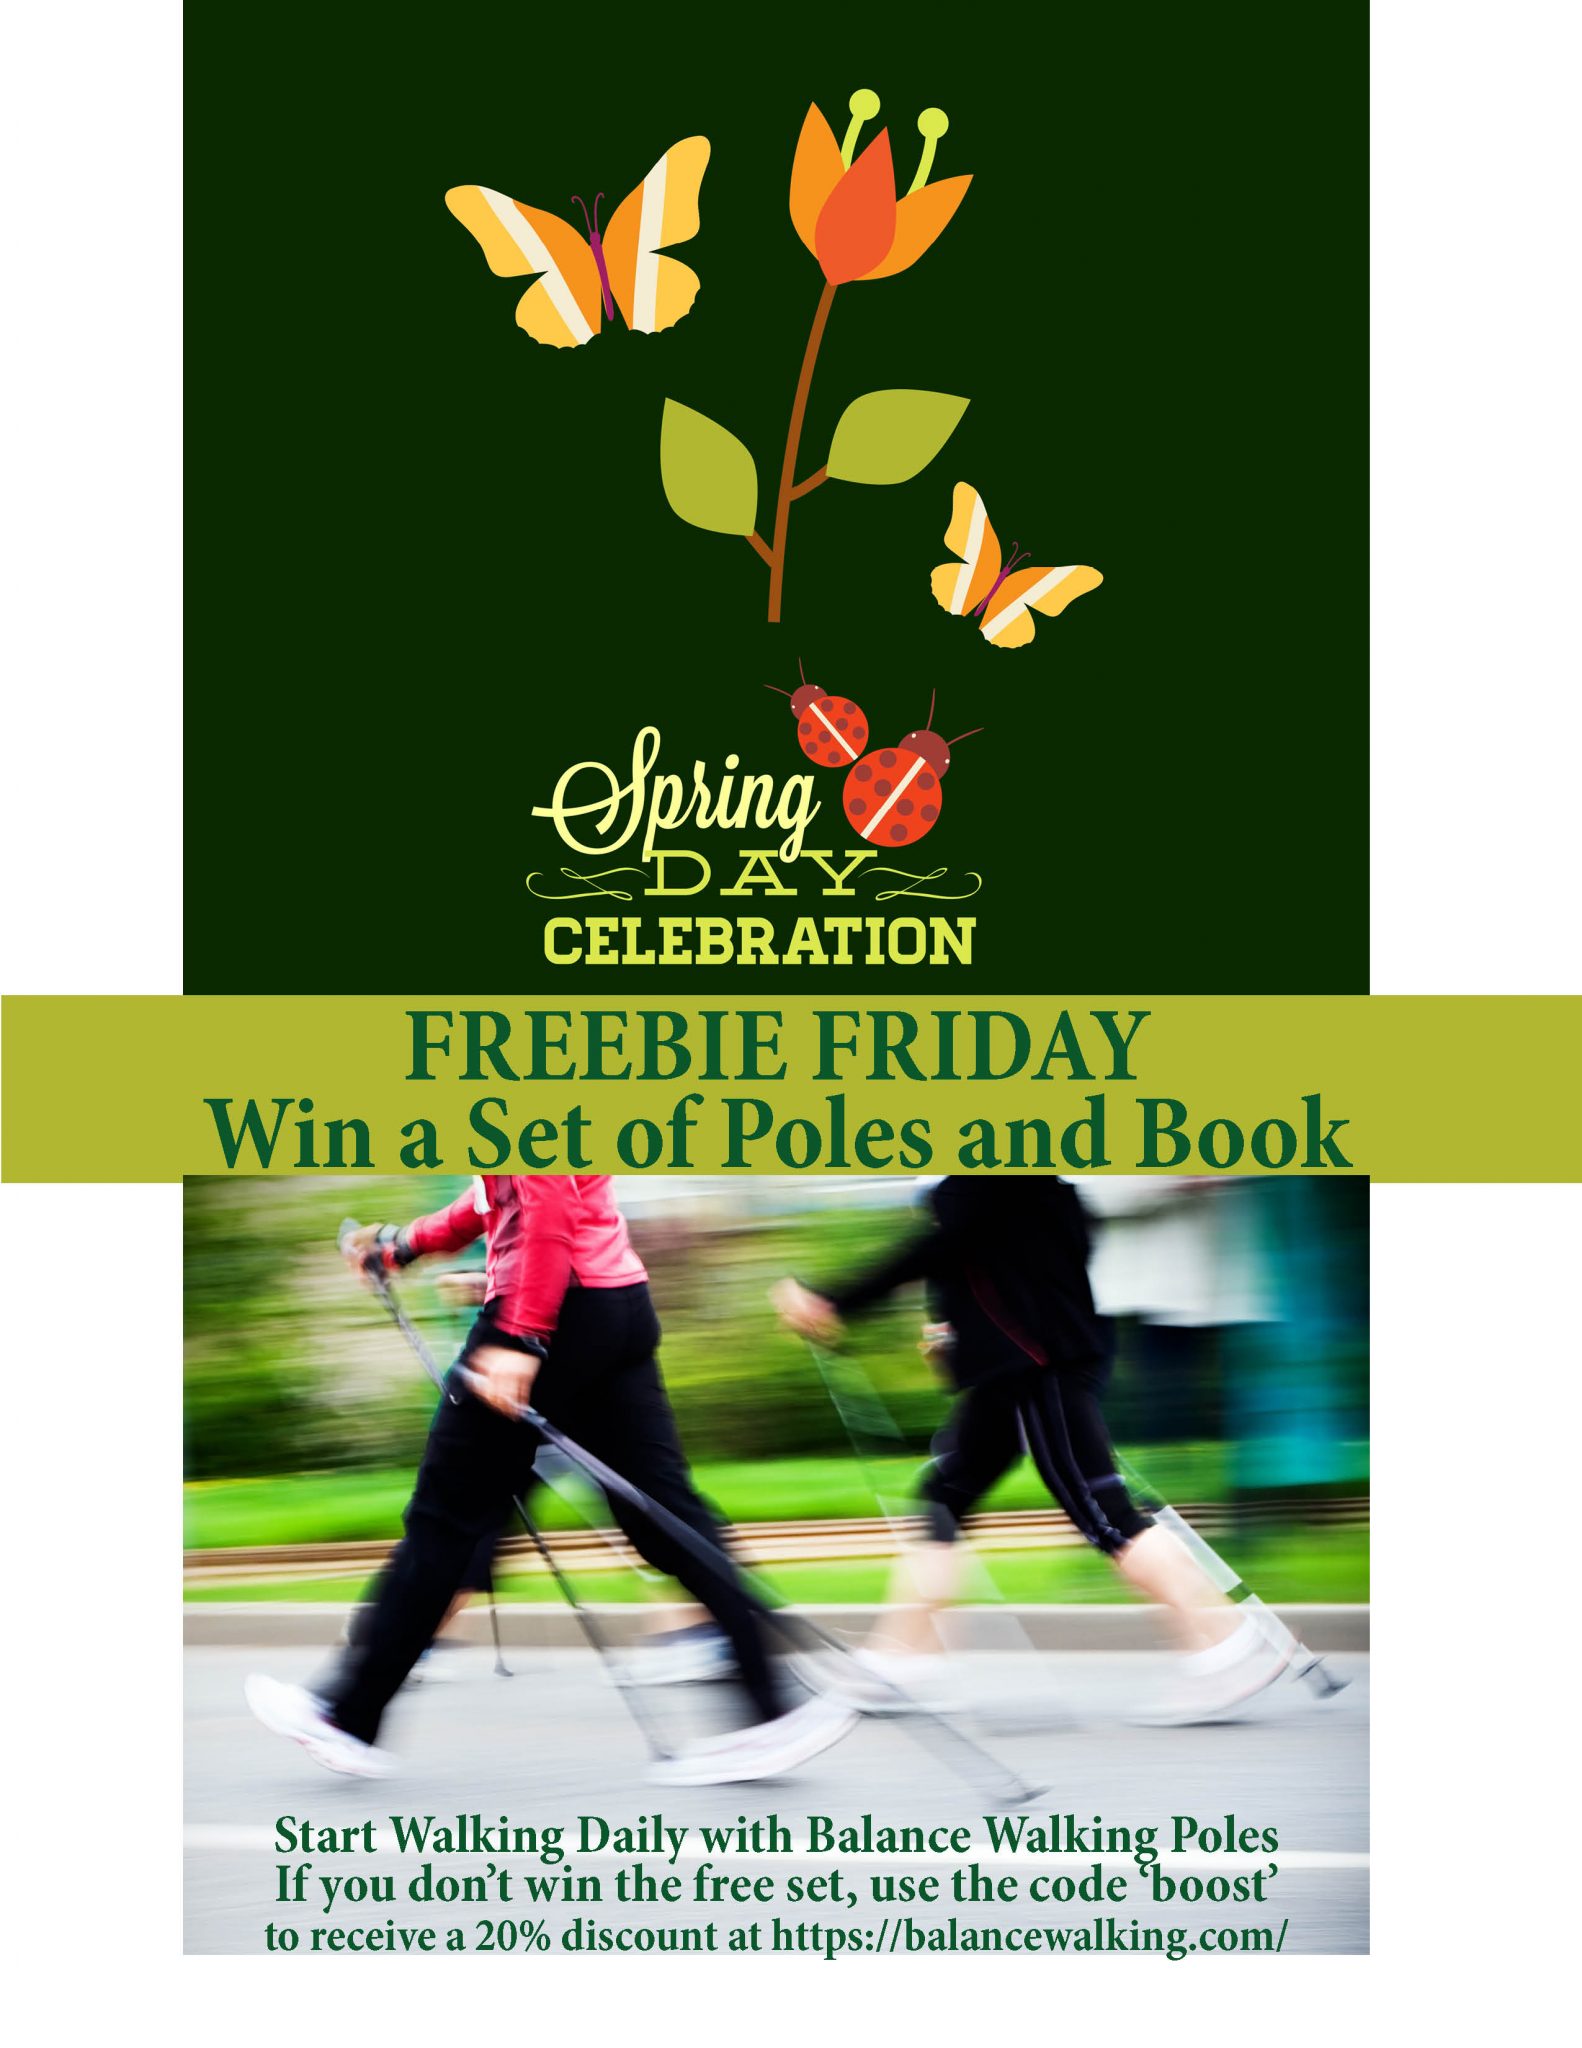 Facebook Friday Freebie!  Enter to Win a Set of Balance Walking Nordic Poles and  Balance Walking Motivational Book “Turn Back the Clock”!